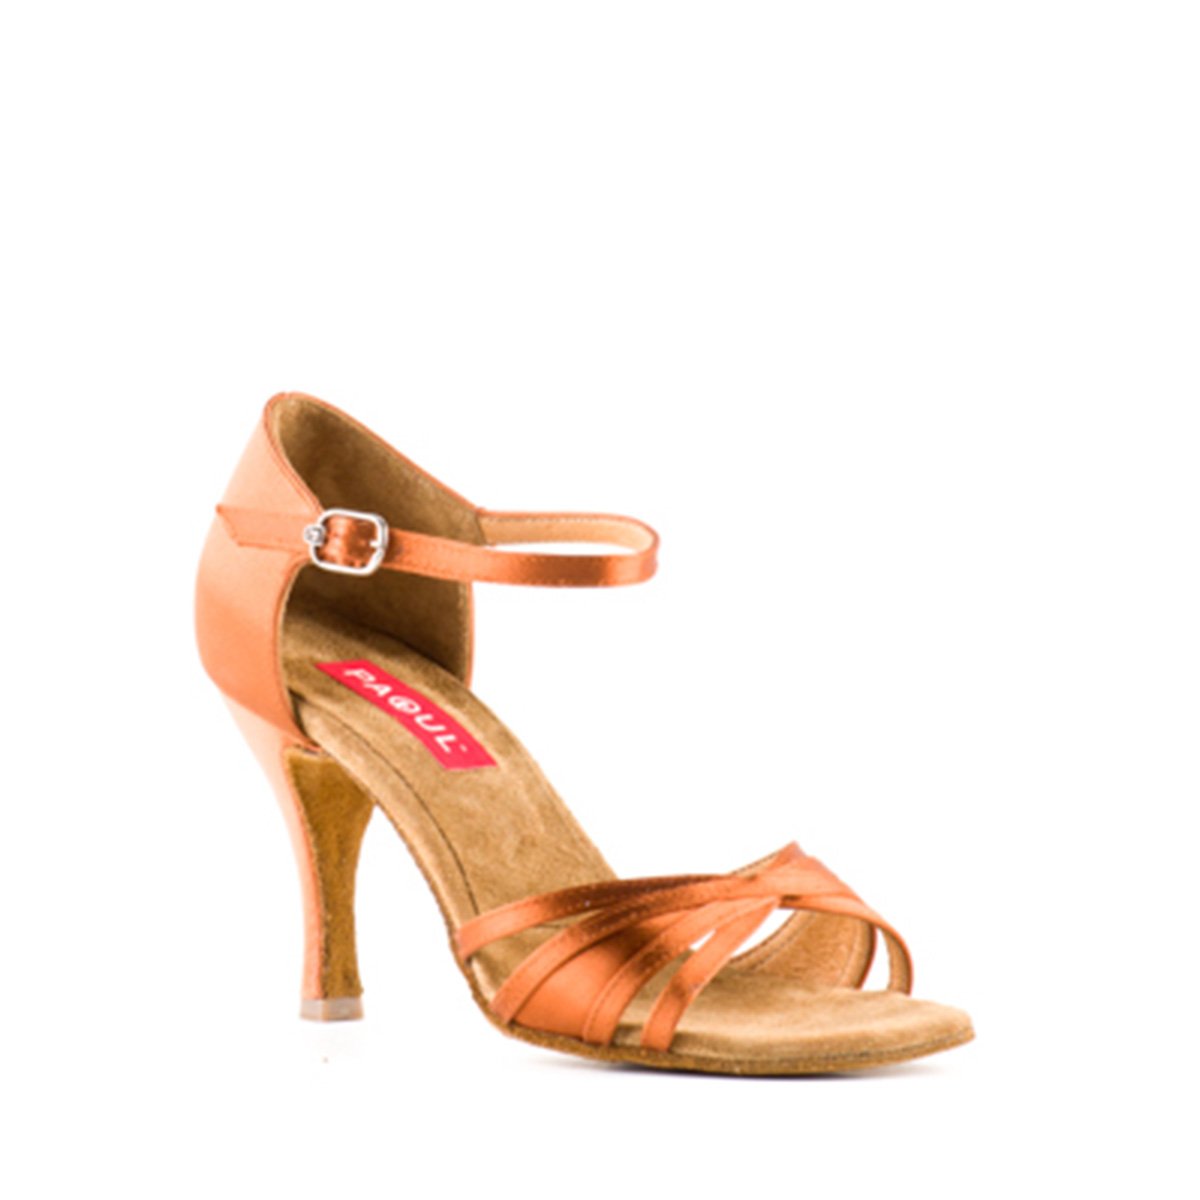 Women's tan Latin dance shoes with stiletto heel